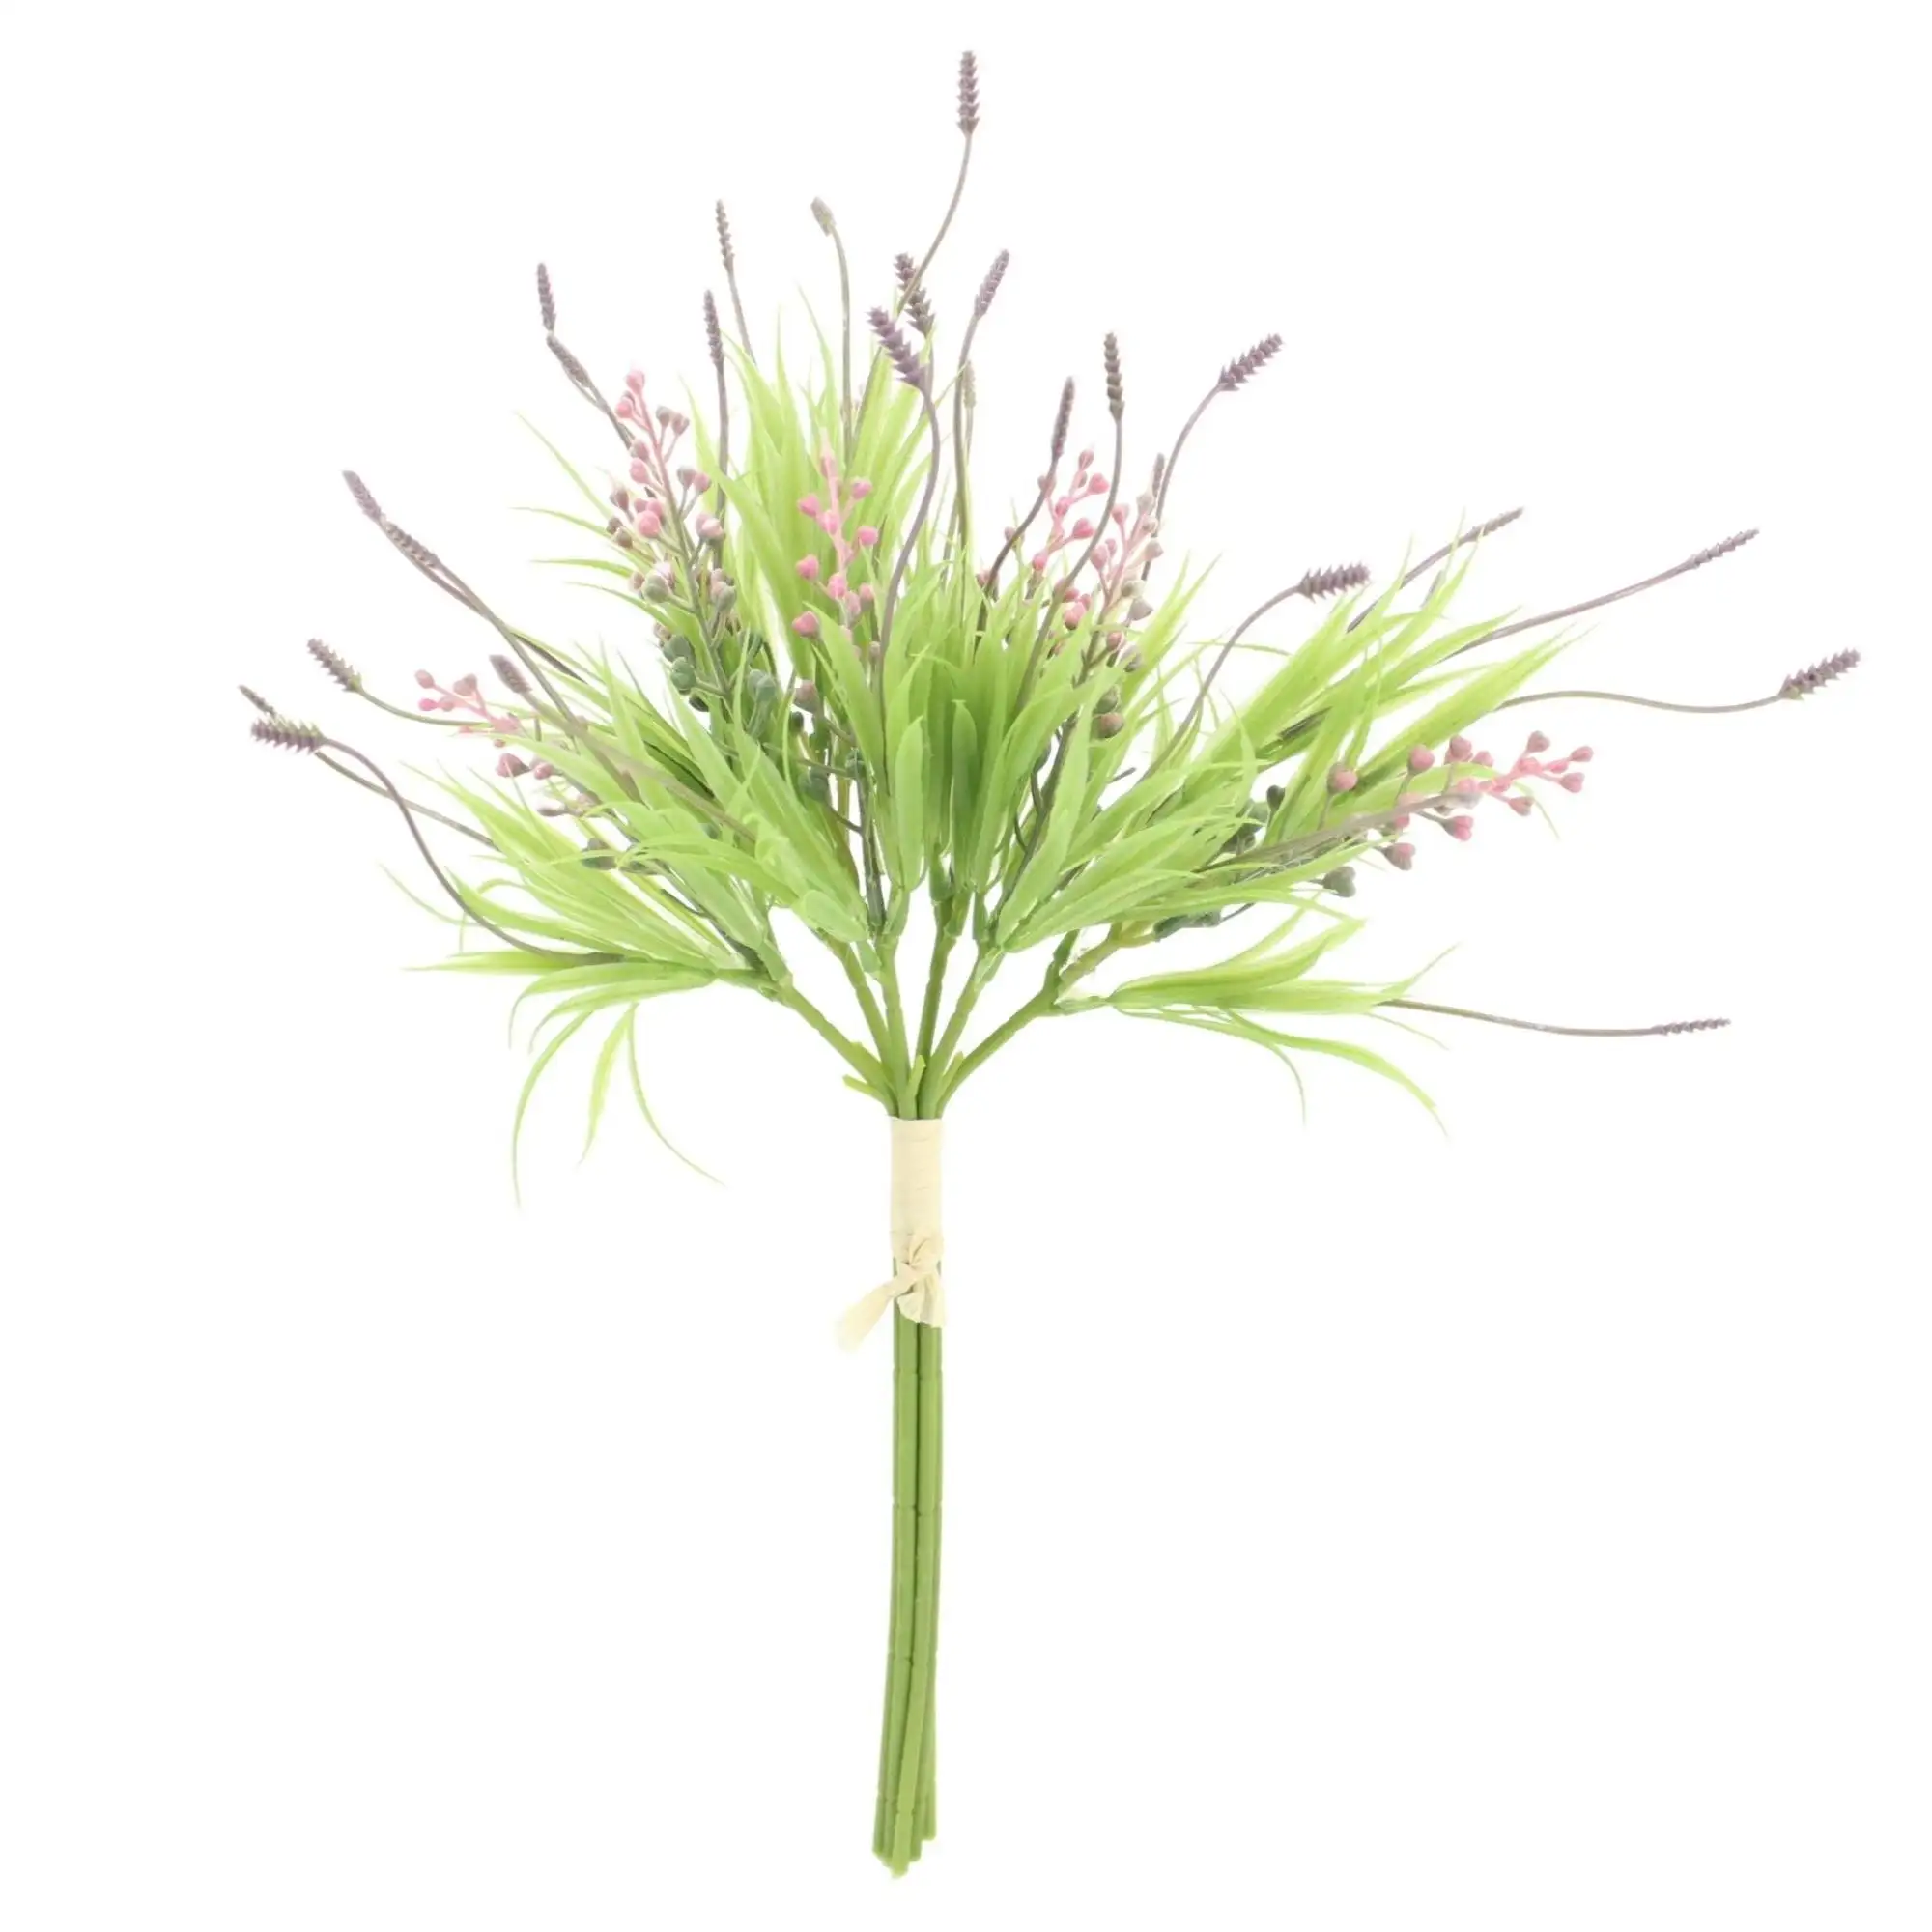 Lifelike Plastic Plants Lavender Flower Shrubs Artificial Lavender Grass Bush for Crafting Wedding Bridal Bouquets or Home Decor